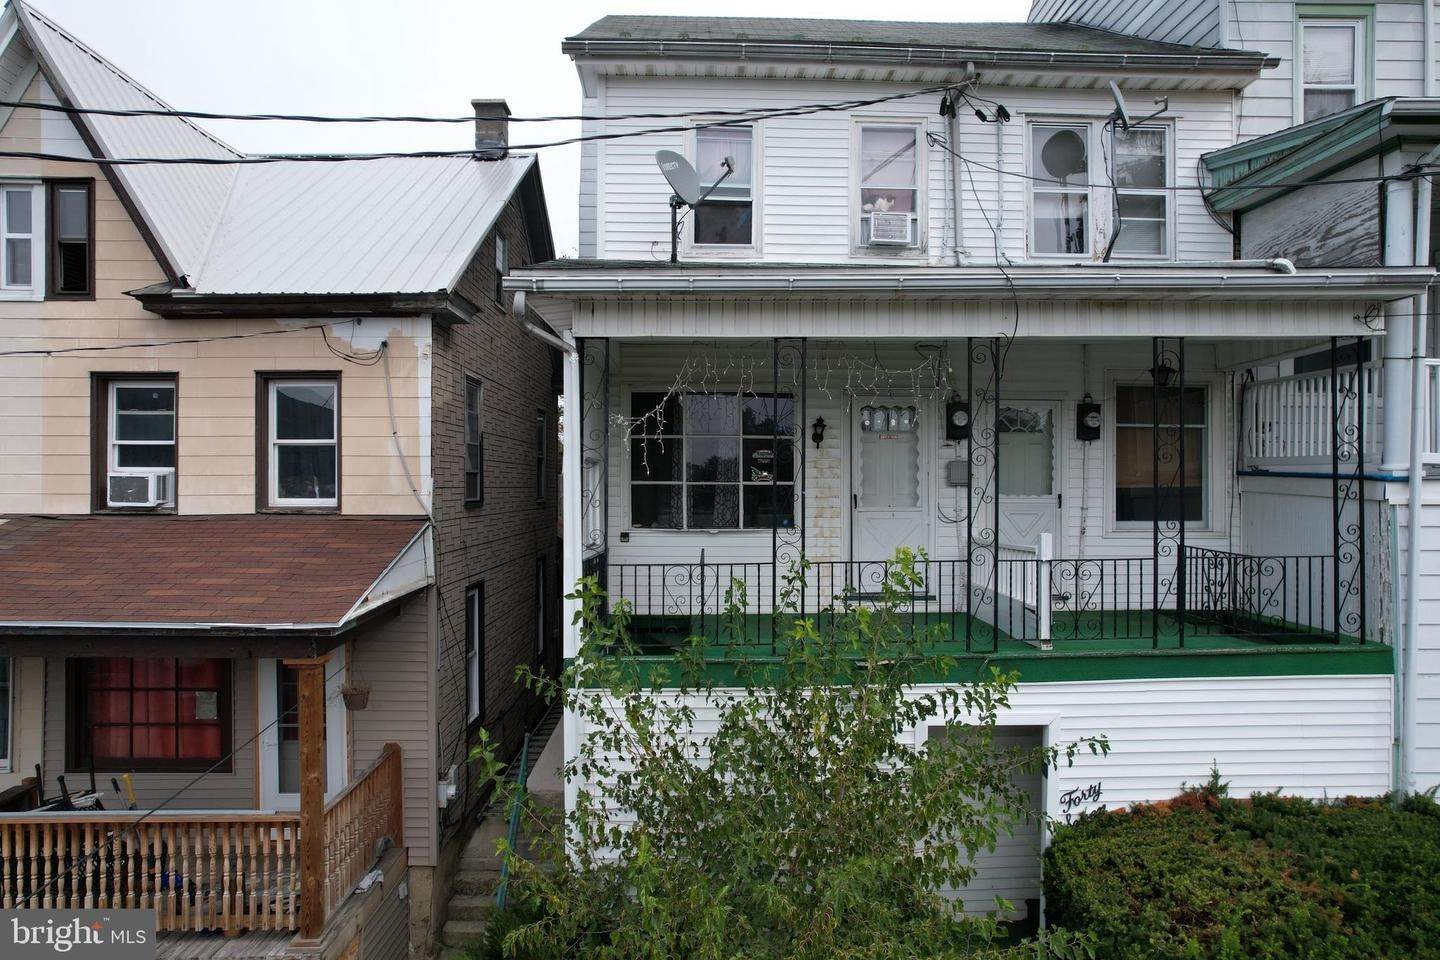 Single Family Homes for Sale at Shamokin, Pennsylvania 17872 United States